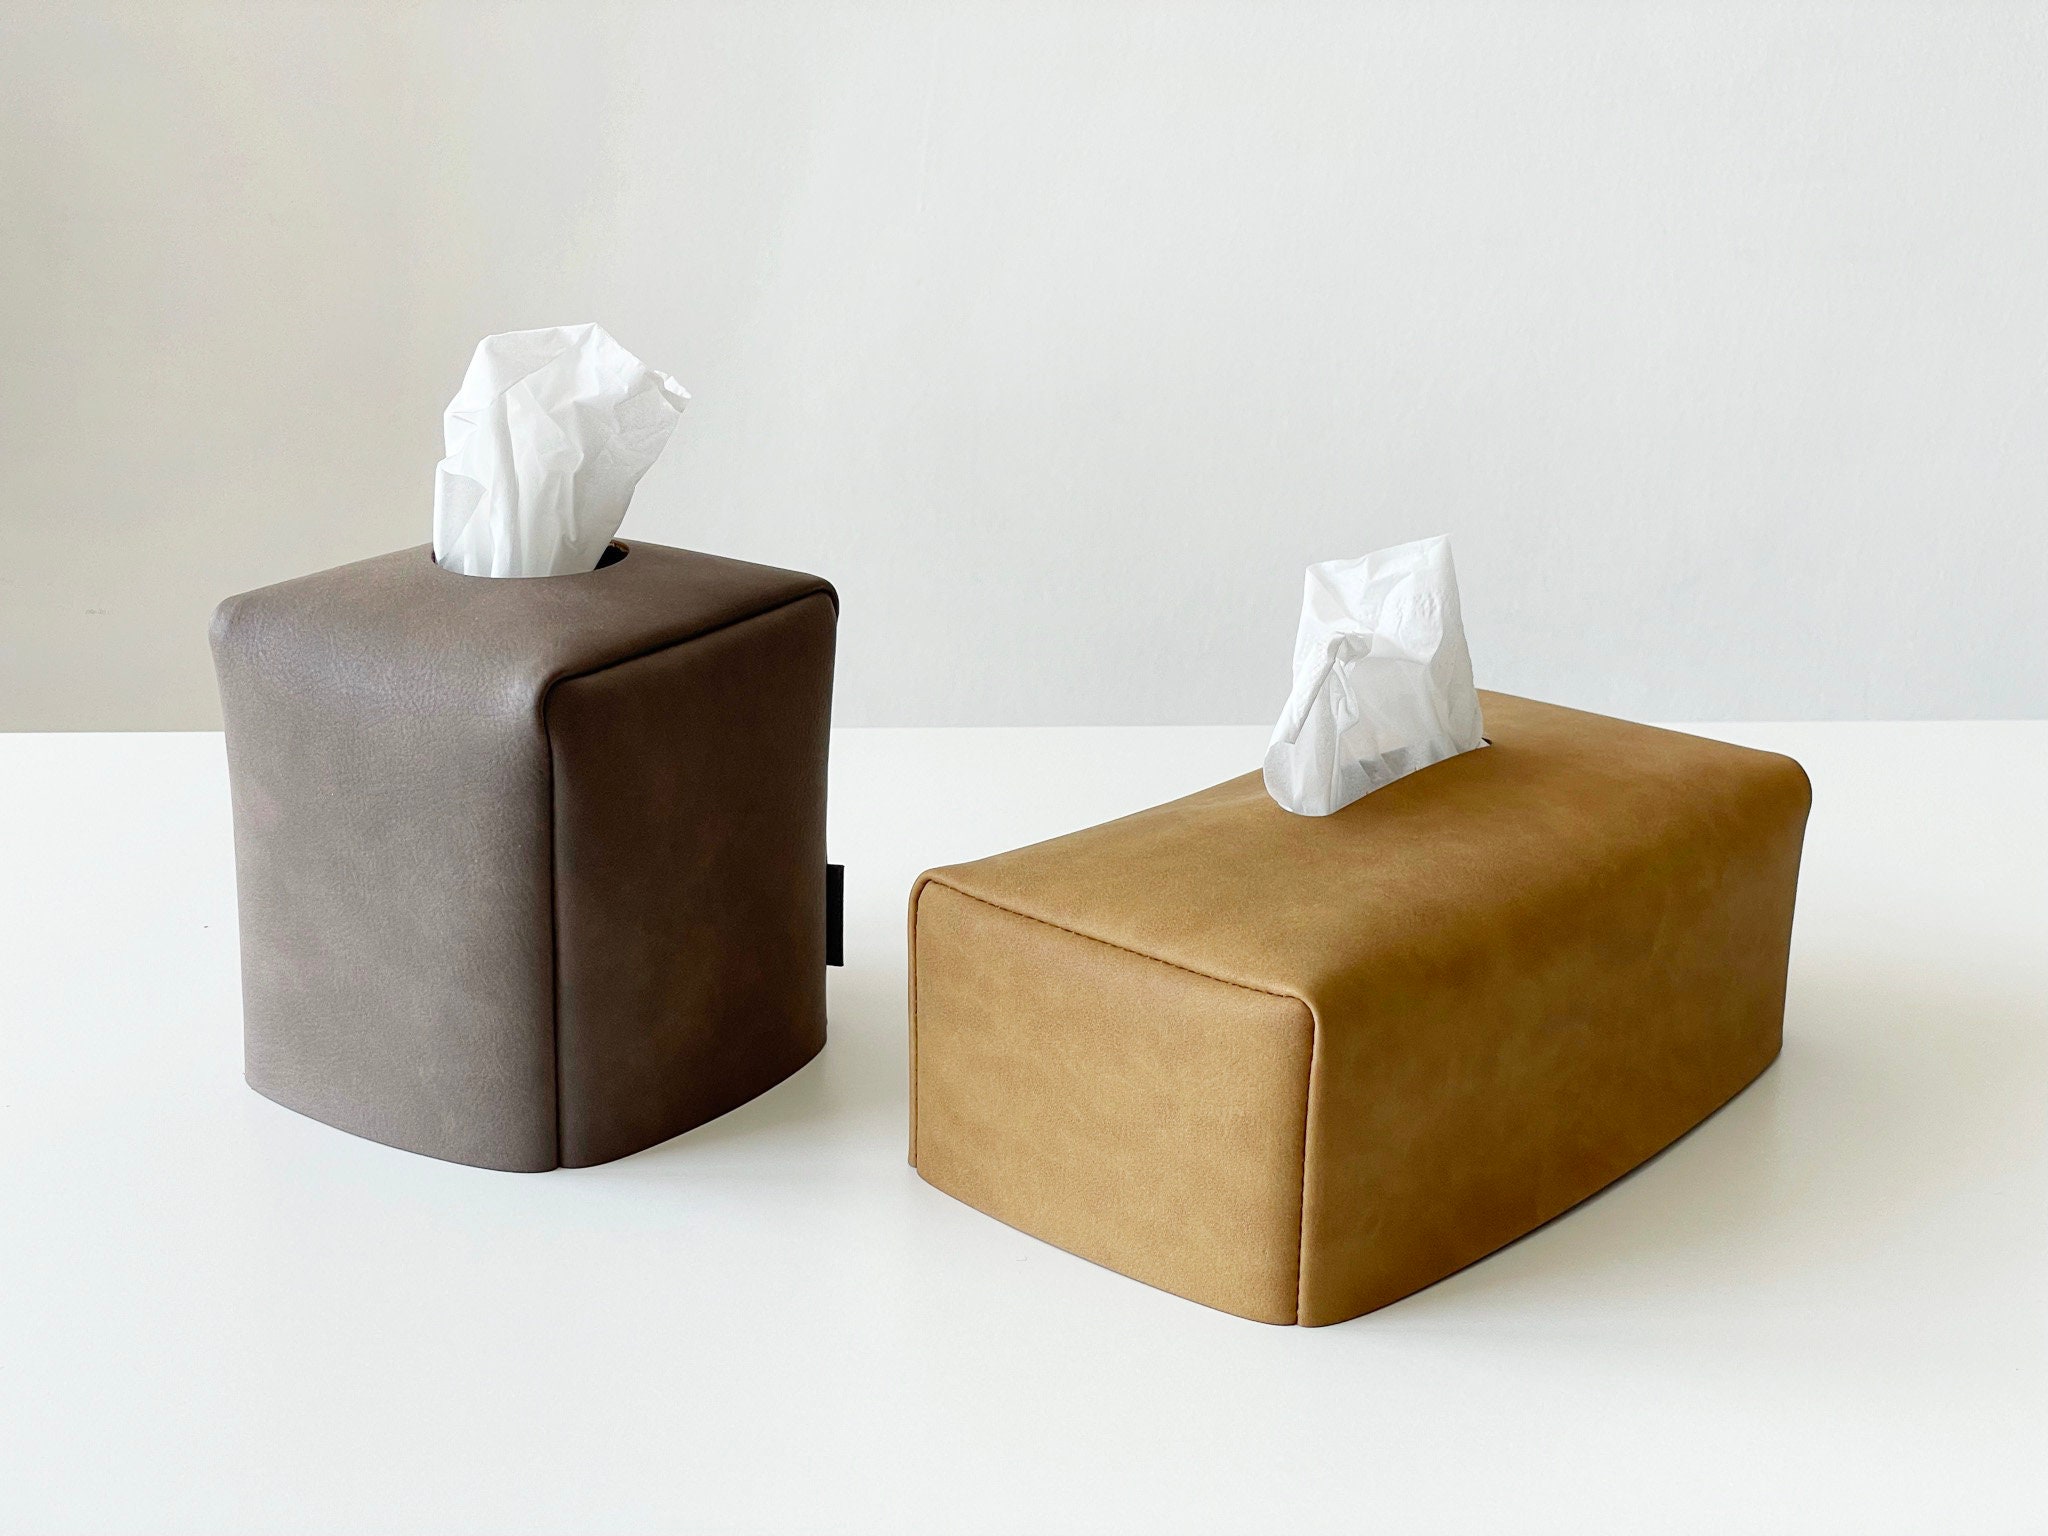 New Rectangle Tissue Box Japanese Wood Holder Cover Home Decor Bathroom Storage 